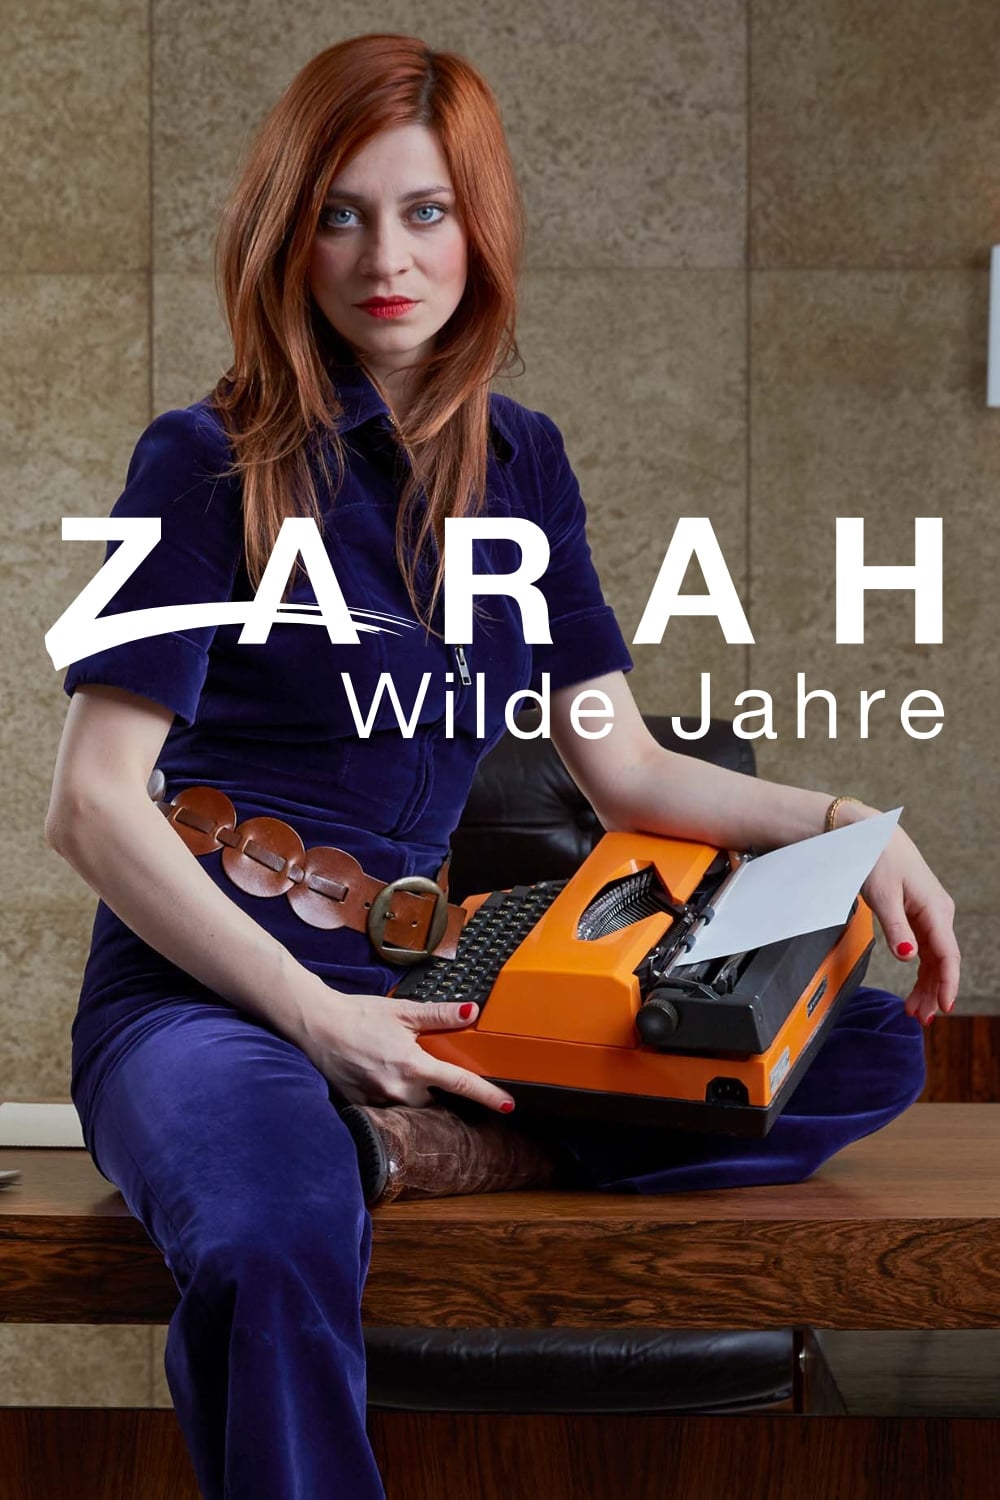 Zarah: Wilde Jahre TV Shows About Feminism